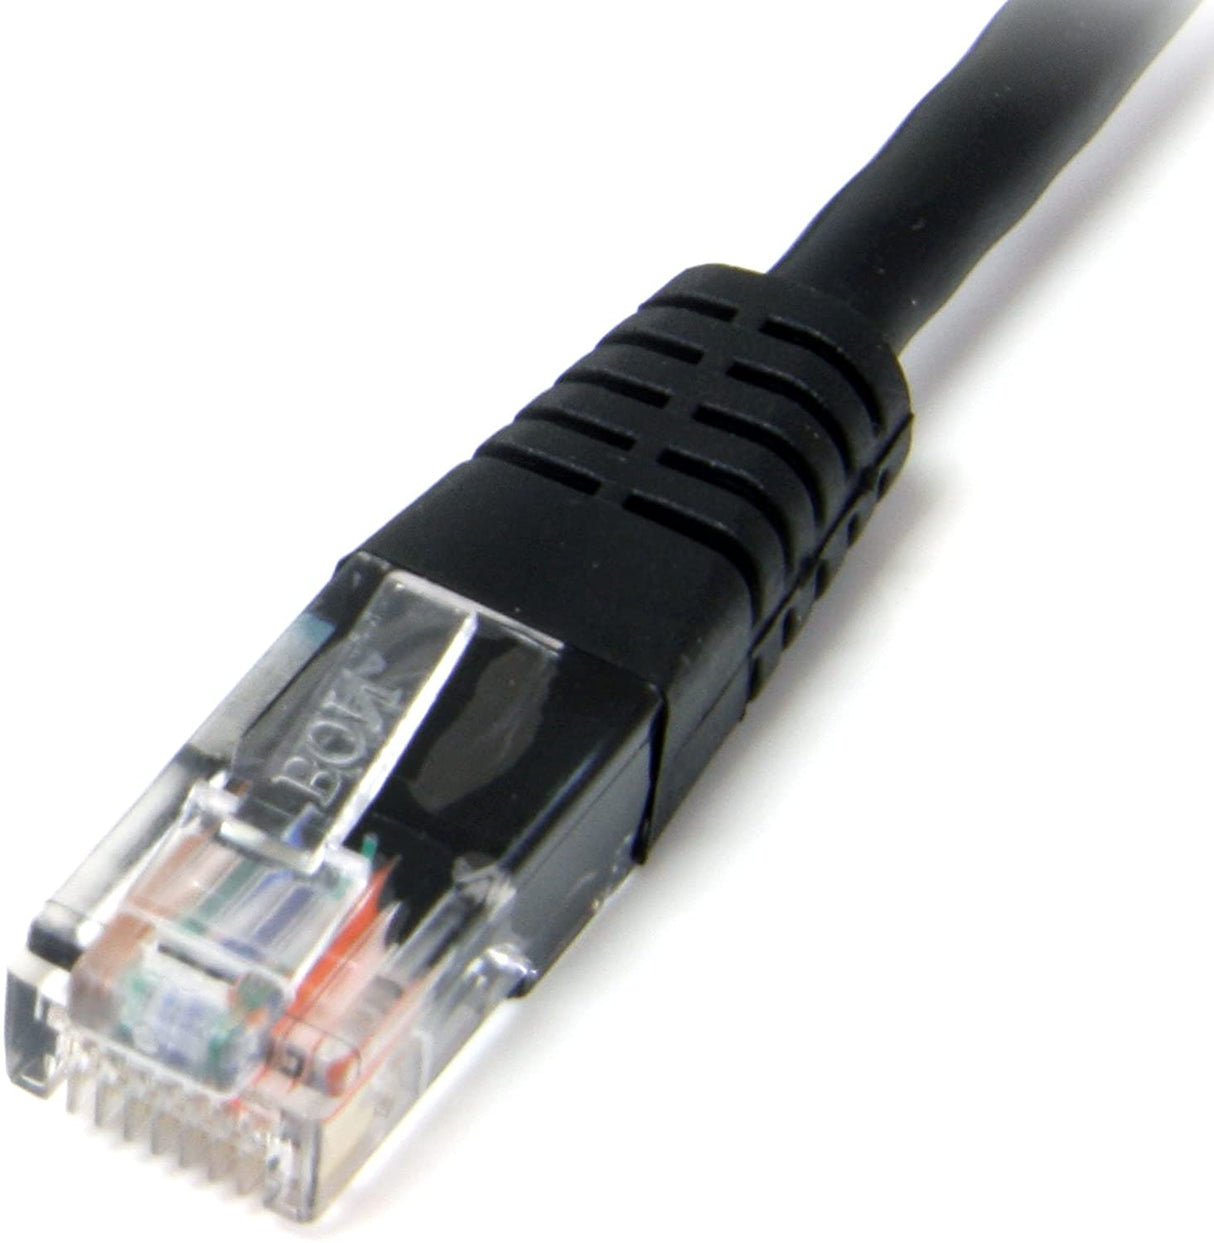 StarTech.com Cat5e Ethernet Cable - 3 ft - Black - Patch Cable - Molded Cat5e Cable - Short Network Cable - Ethernet Cord - Cat 5e Cable - 3ft (M45PATCH3BK) 3 ft / 1m Black